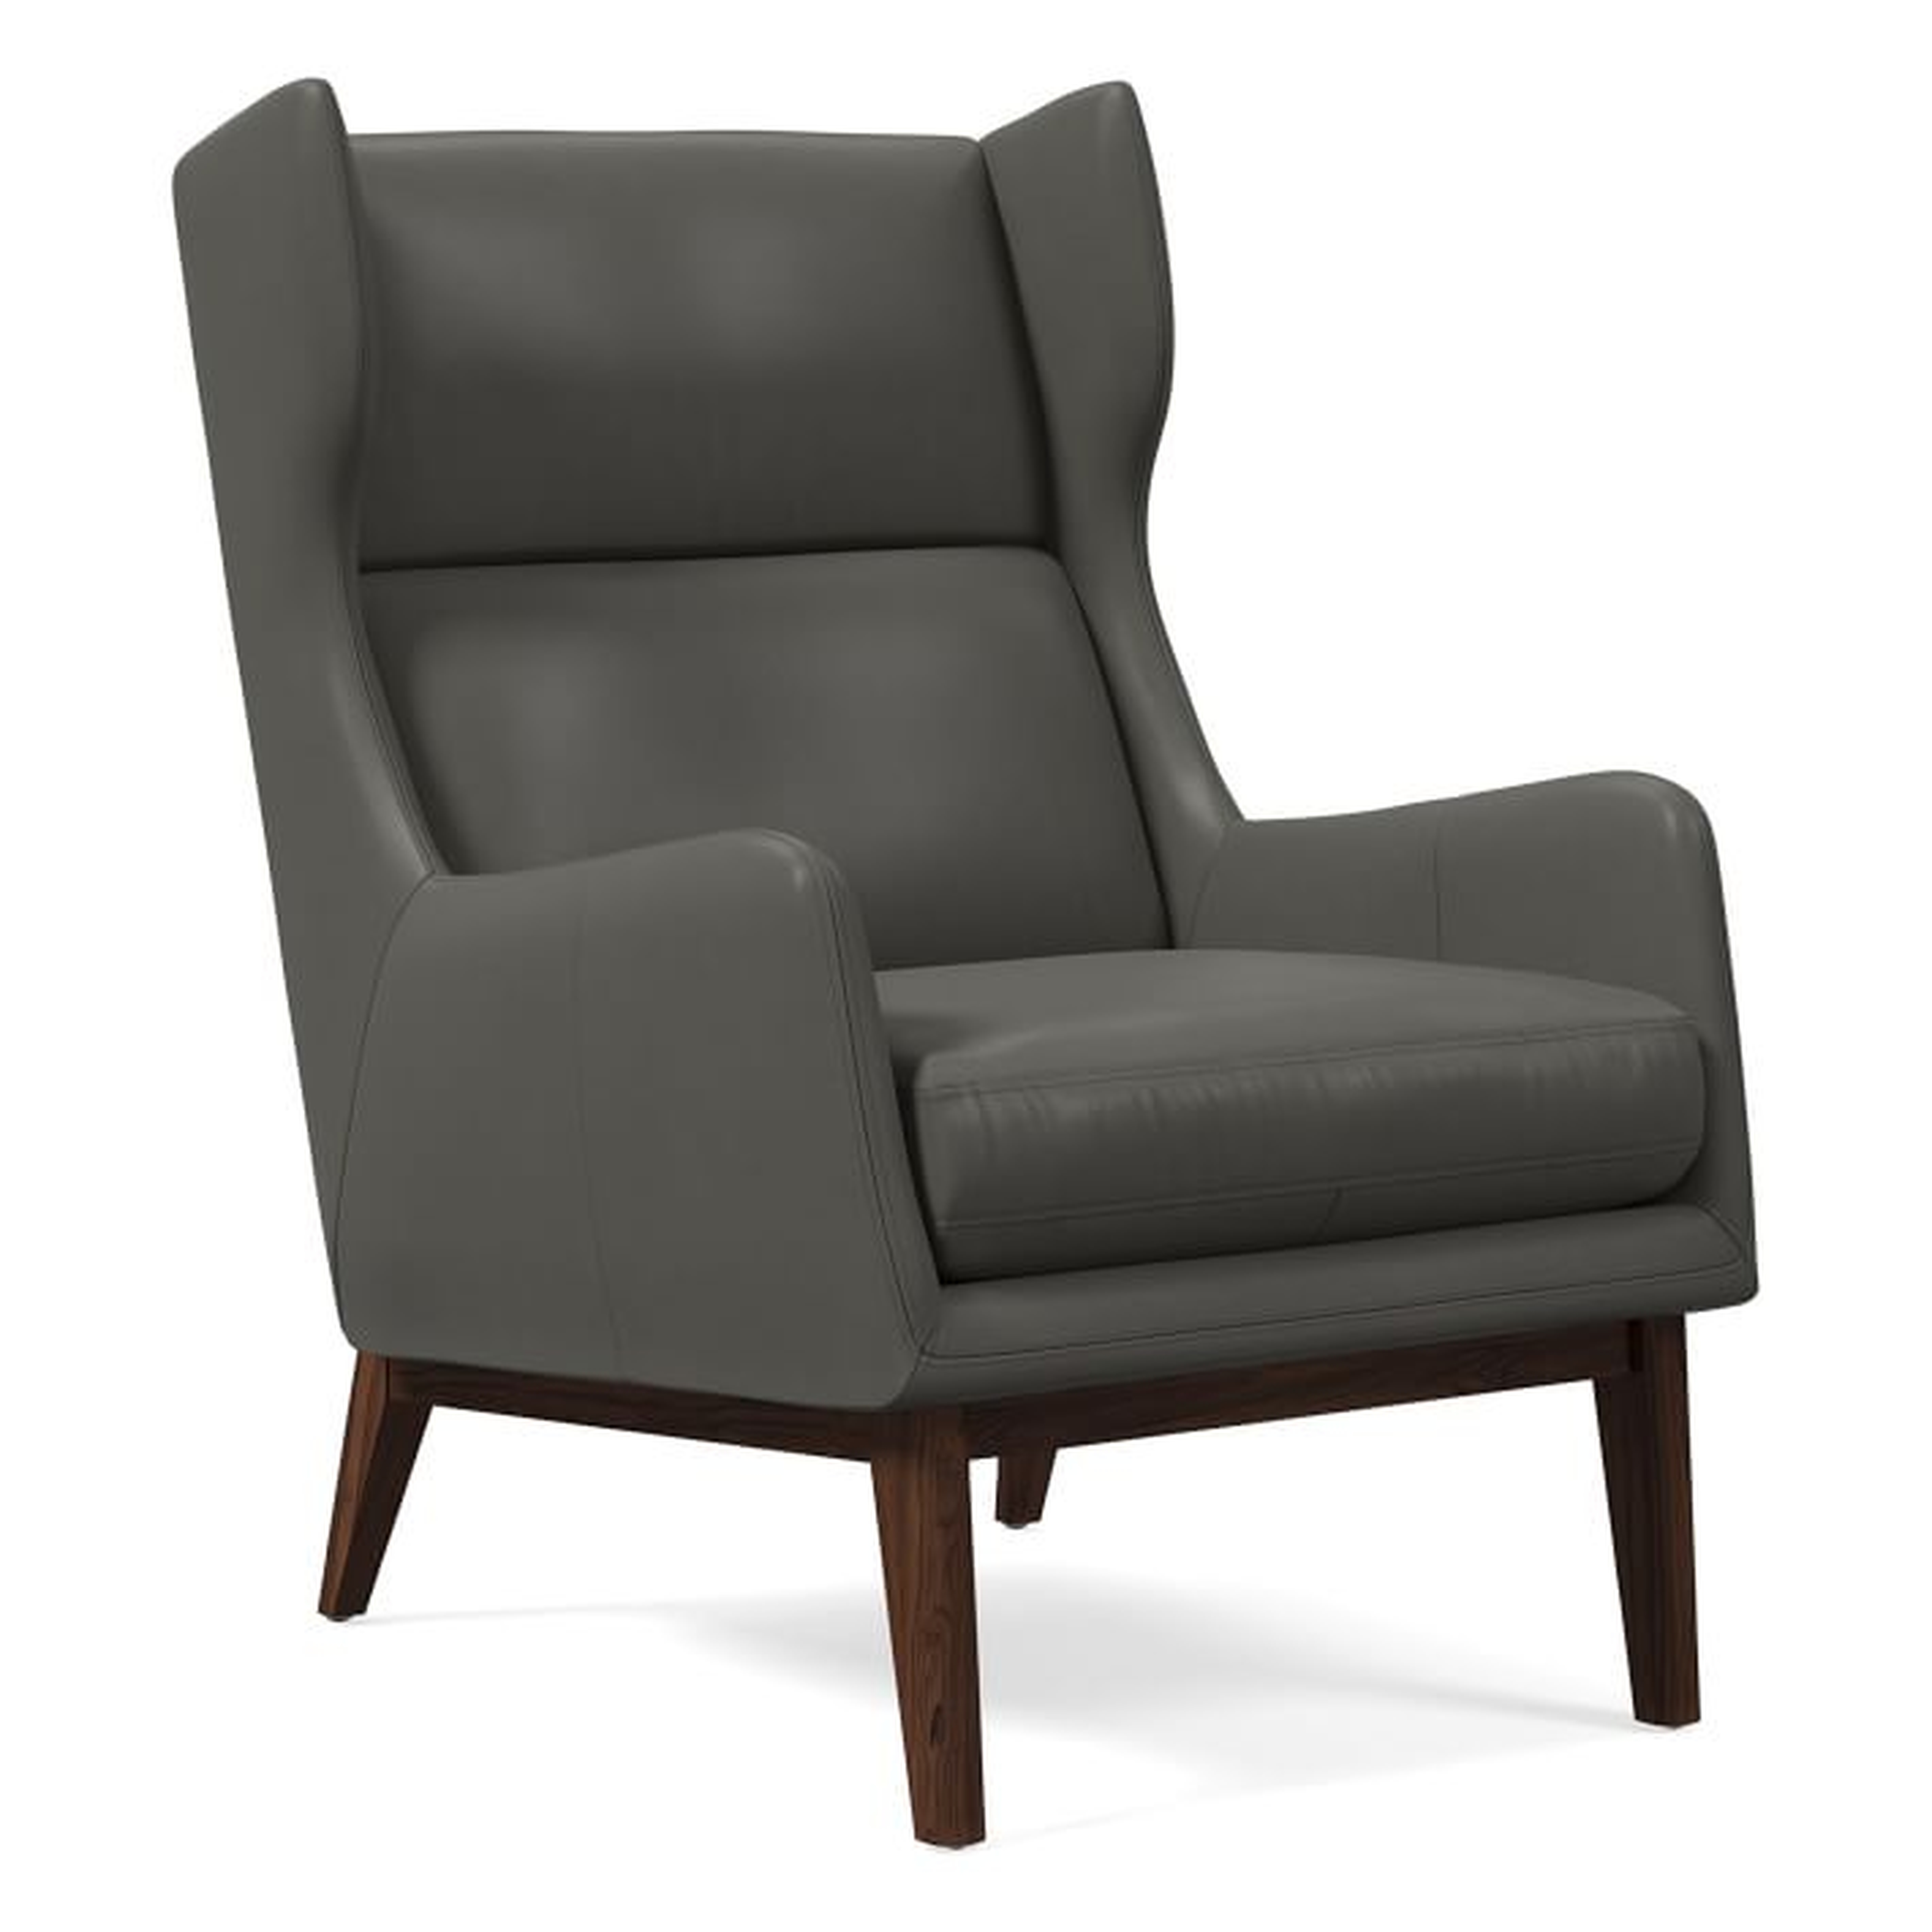 Ryder Leather Chair, Aspen Leather, Fog, Dark Walnut - West Elm